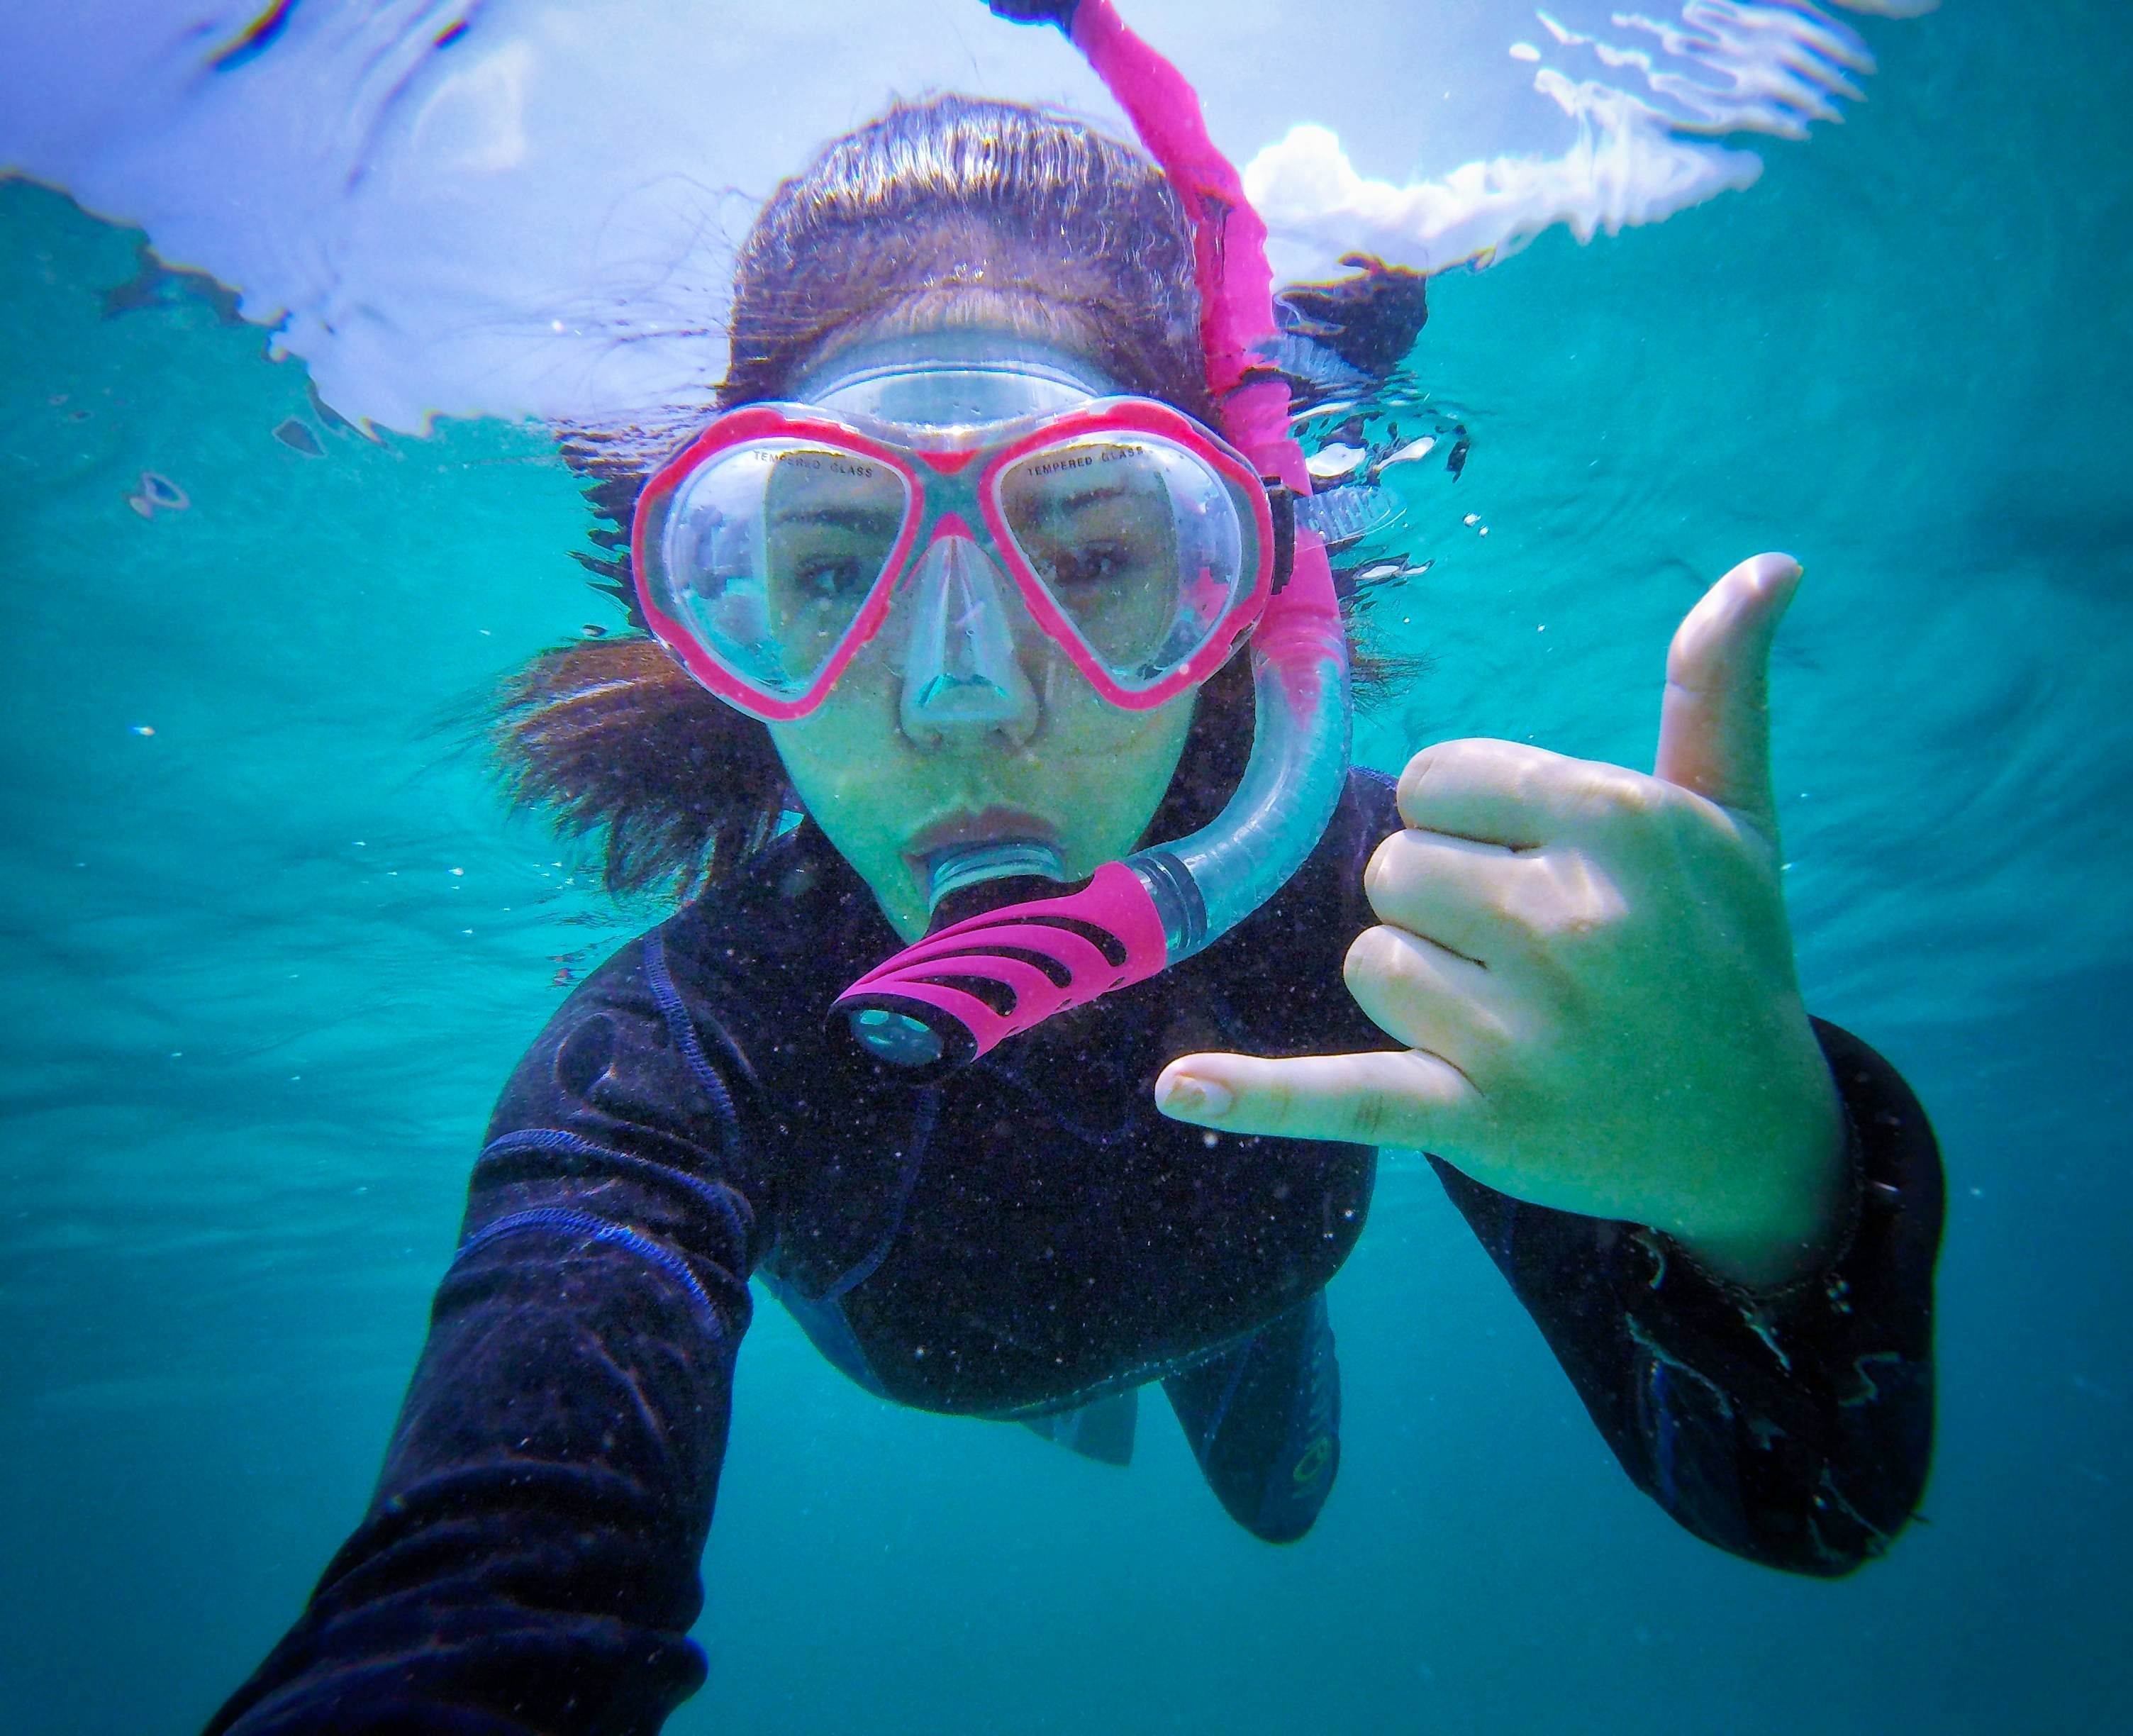 Full Day Snorkeling, Pattaya